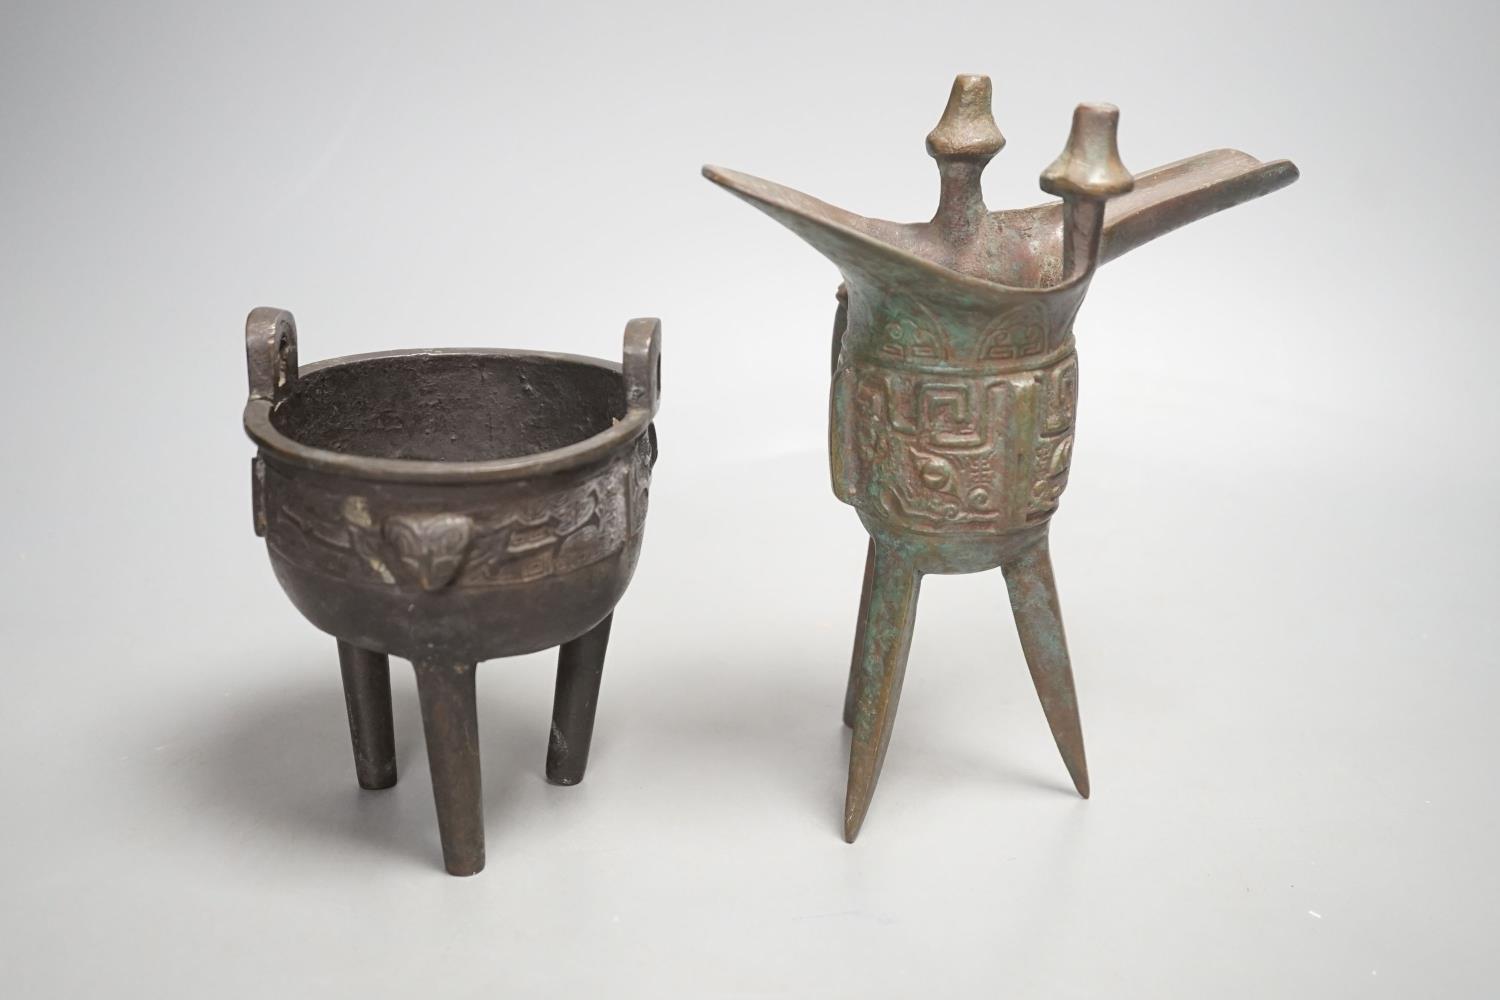 A Chinese bronze wine vessel and bronze tripod censer,wine vessel 19cms high